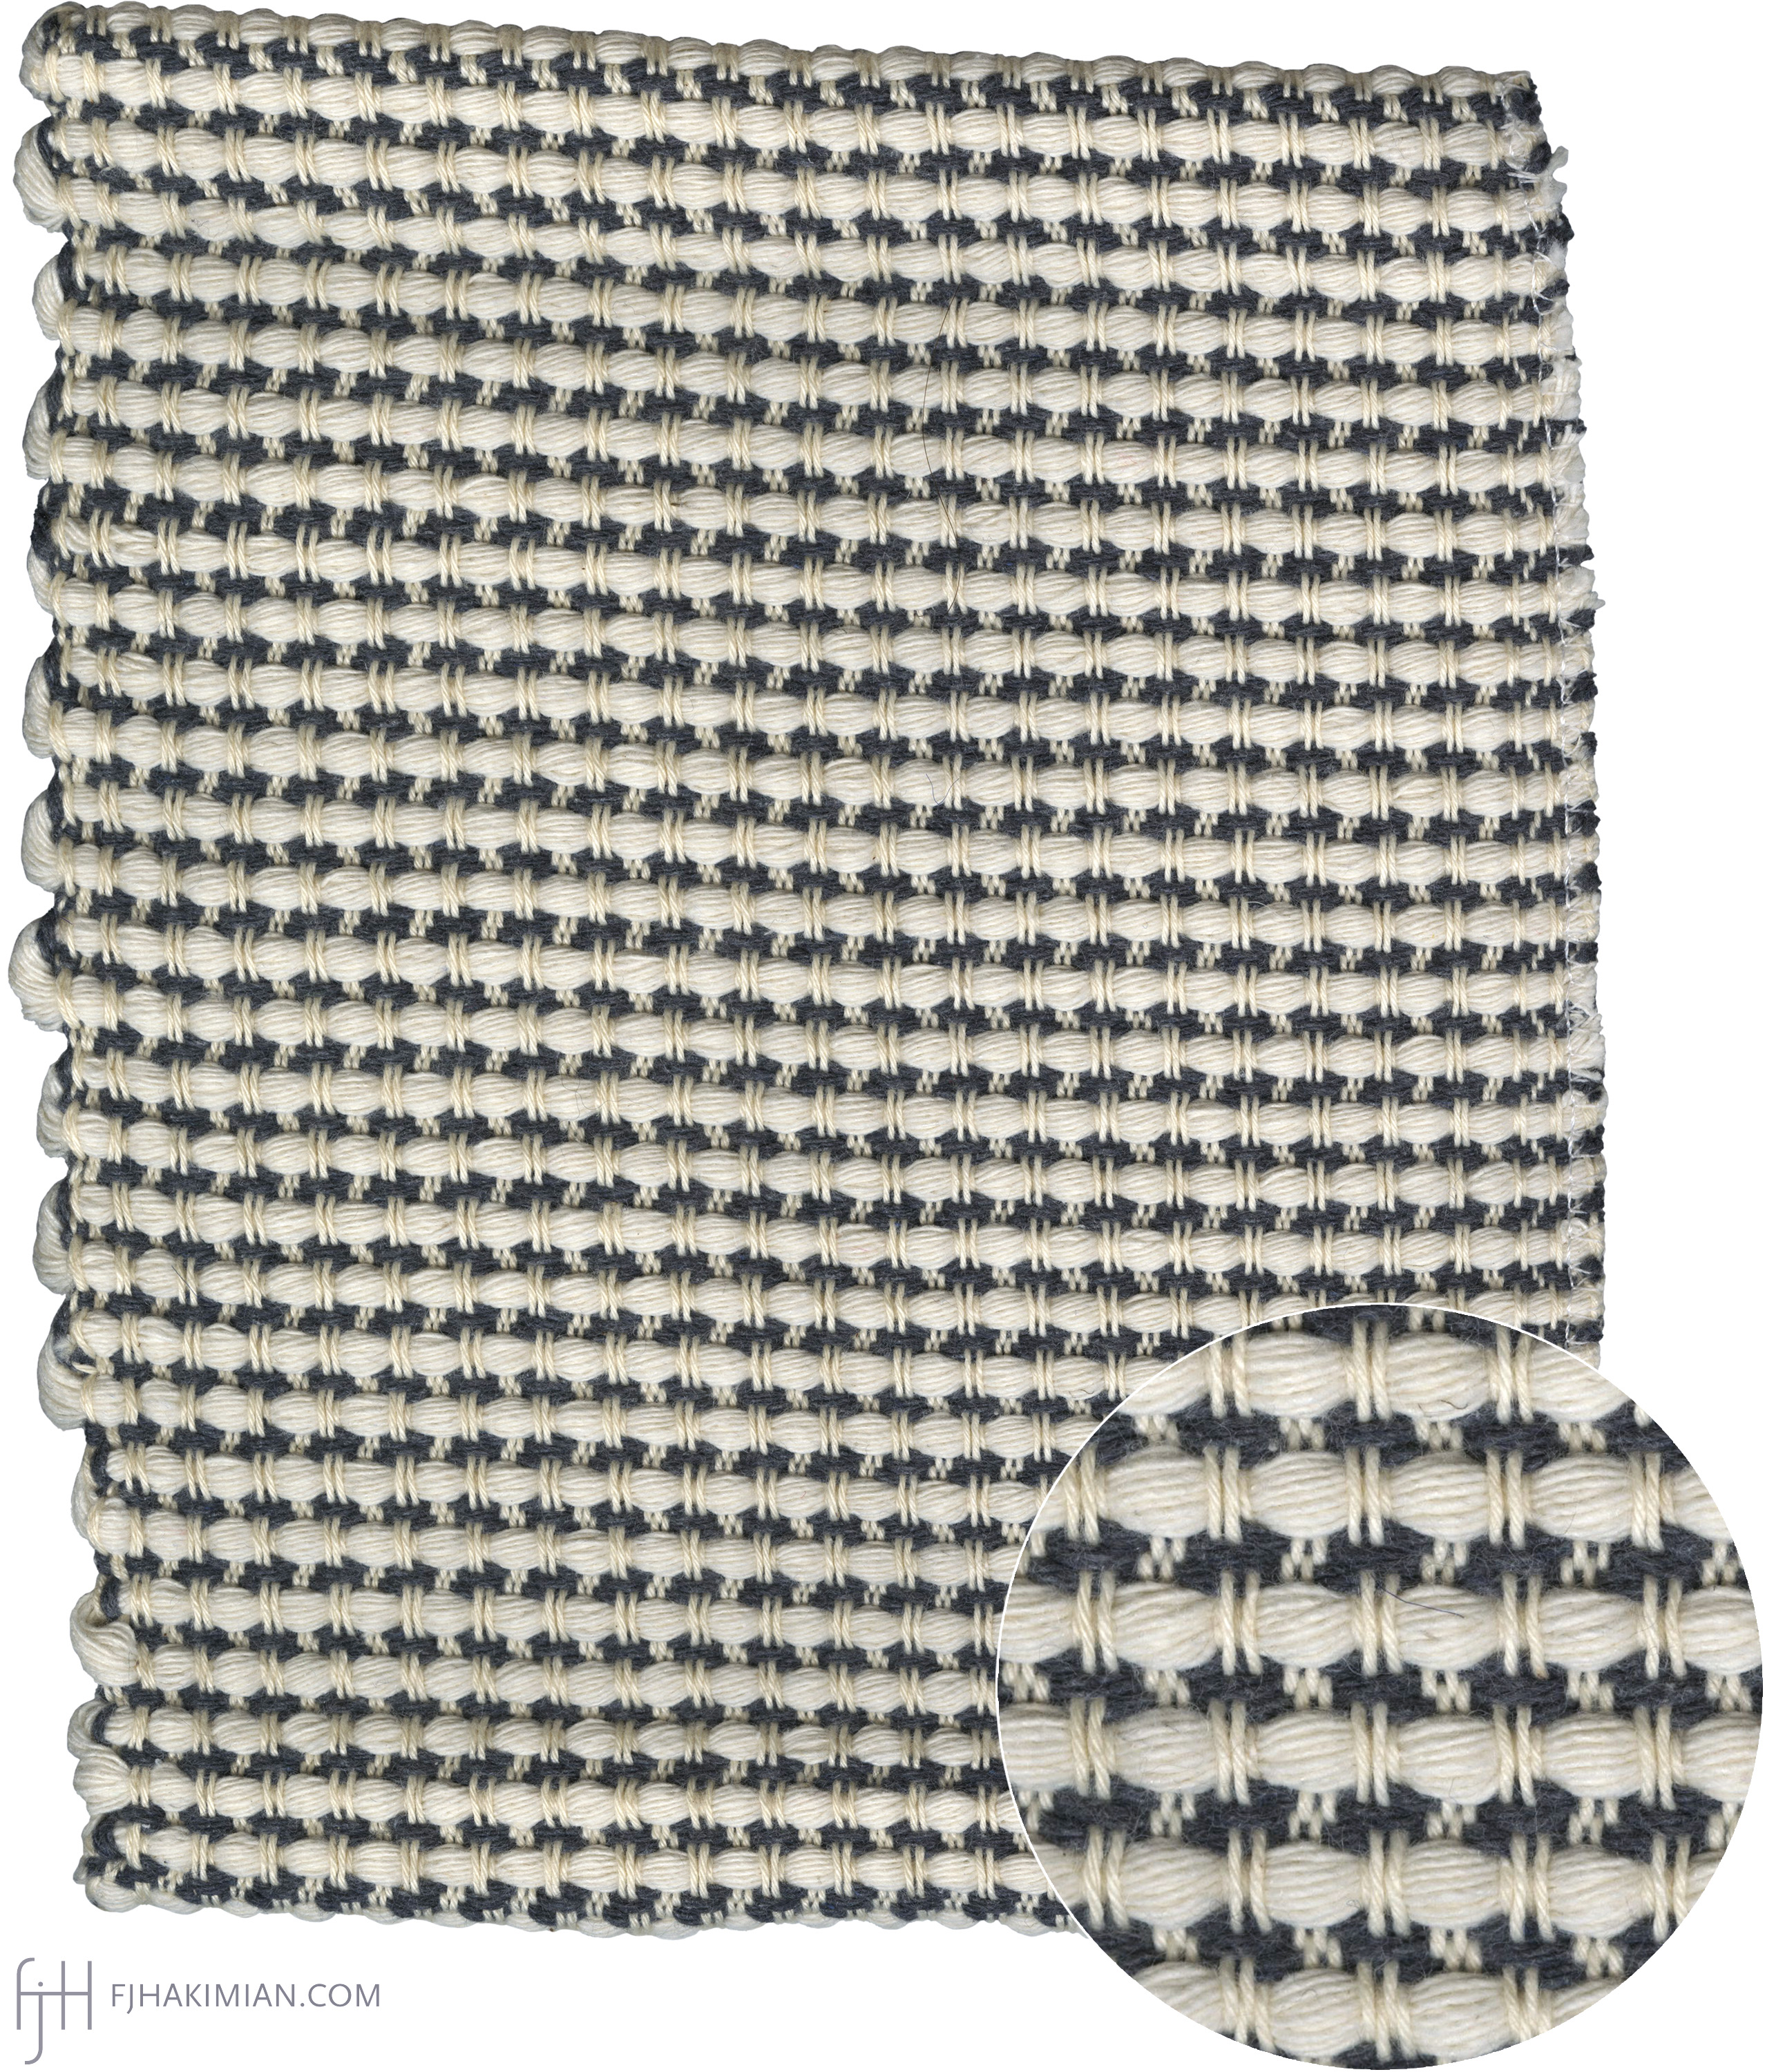 IF-Sardinian Gray Design | Custom Sardinian Carpet | FJ Hakimian | Carpet Gallery in NYC